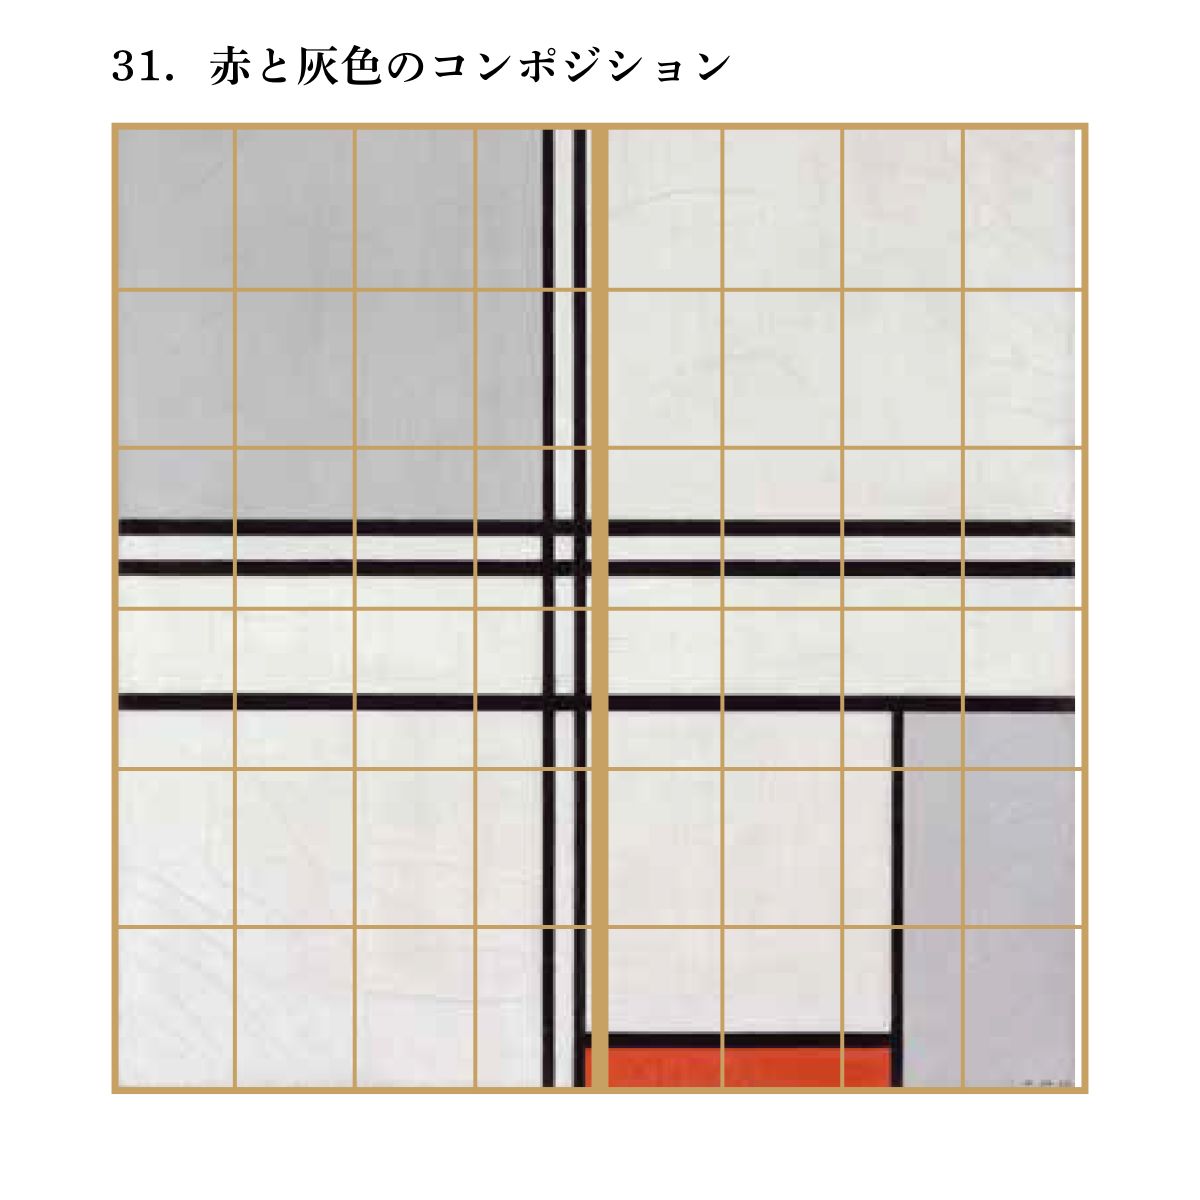 World Famous Shoji Paper Mondrian Red and Gray Composition Set of 2 Water Paste Type Width 91cm x Length 182cm Shoji Paper Asahi Pen WWA-031S